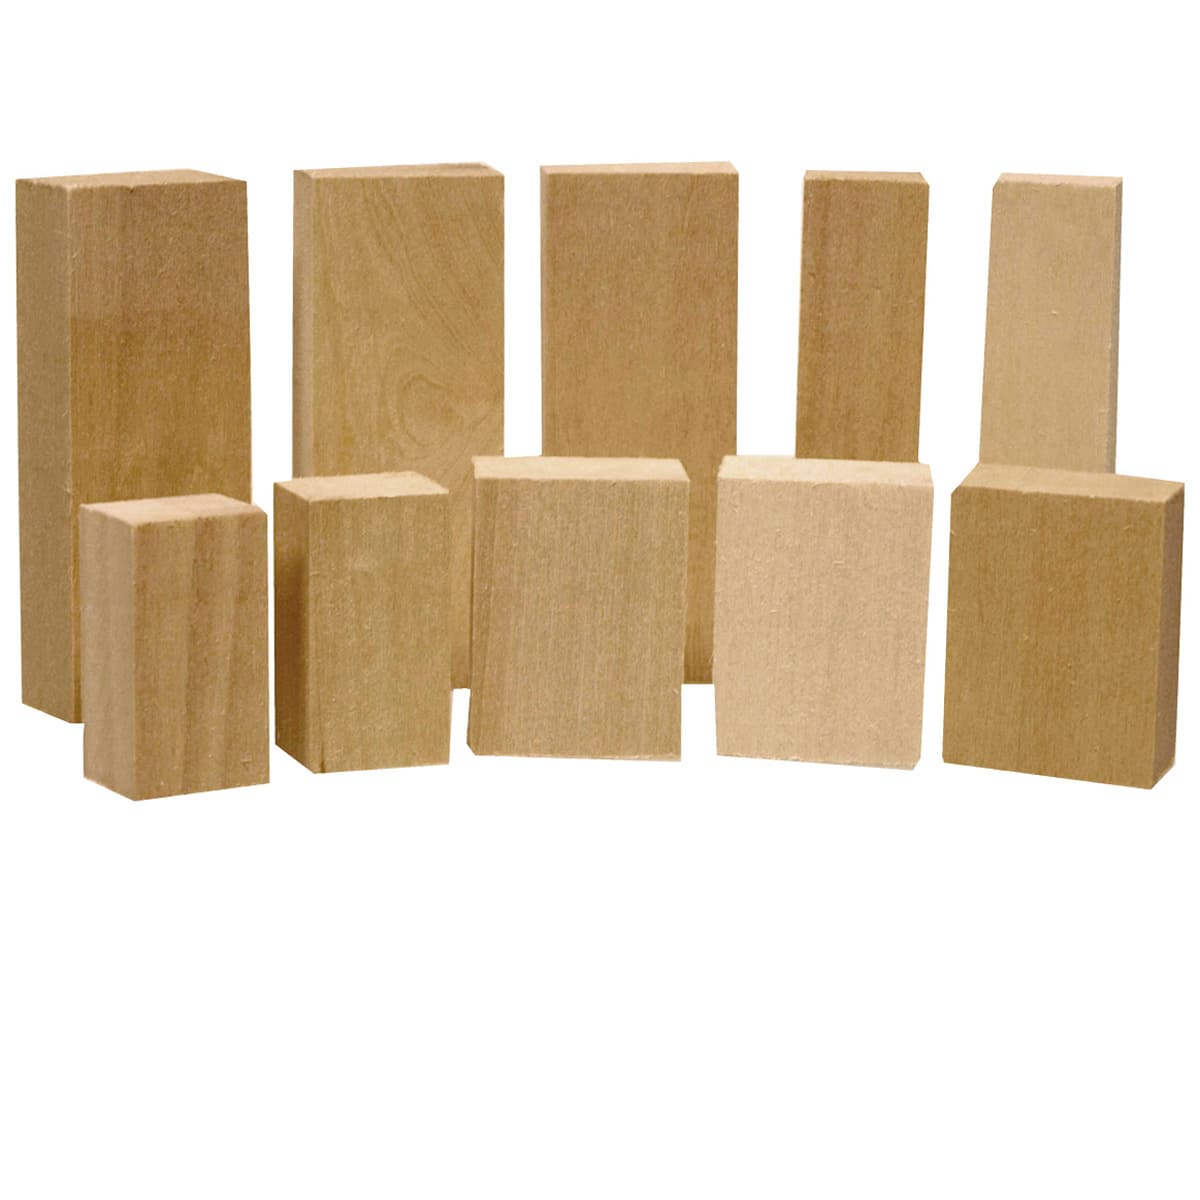 Basswood Carving Block 1-1/2 x 1-1/2 x 4 –